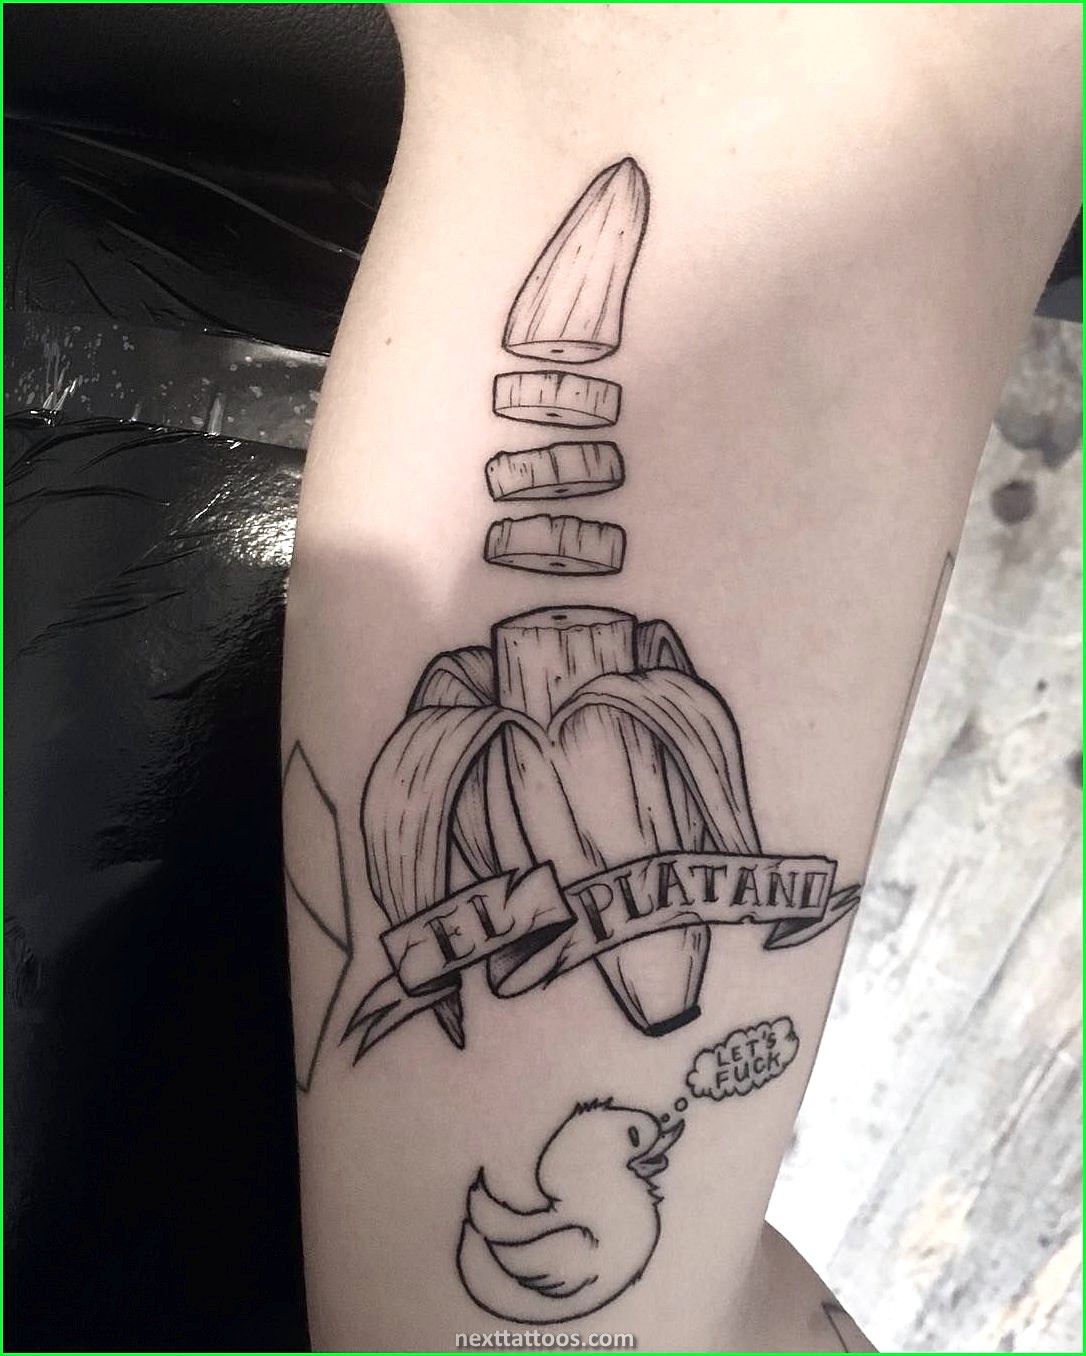 A Jellyfish Tattoo by Sasha Unisex